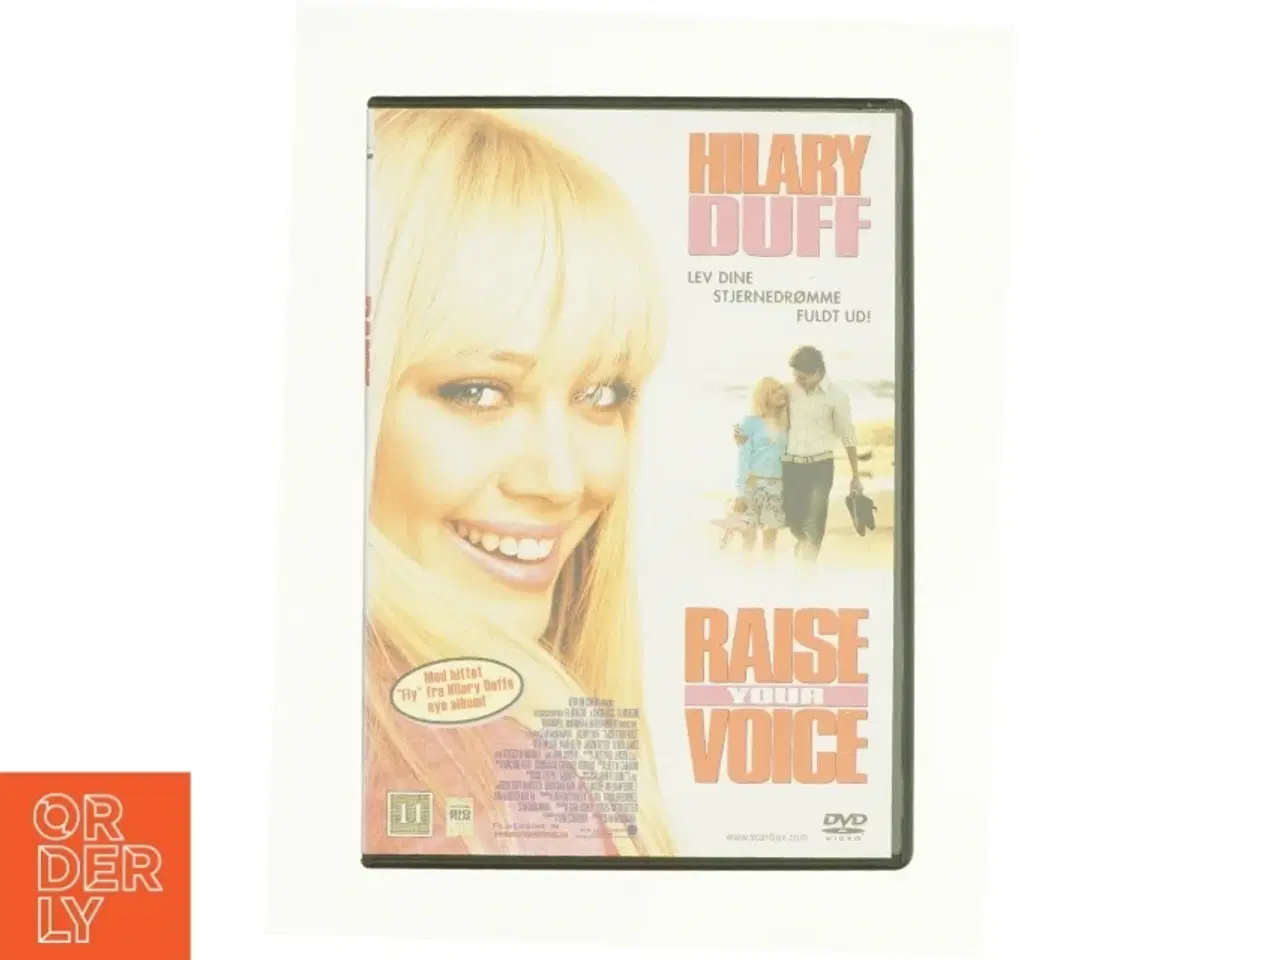 Billede 1 - Raise your voice fra DVD